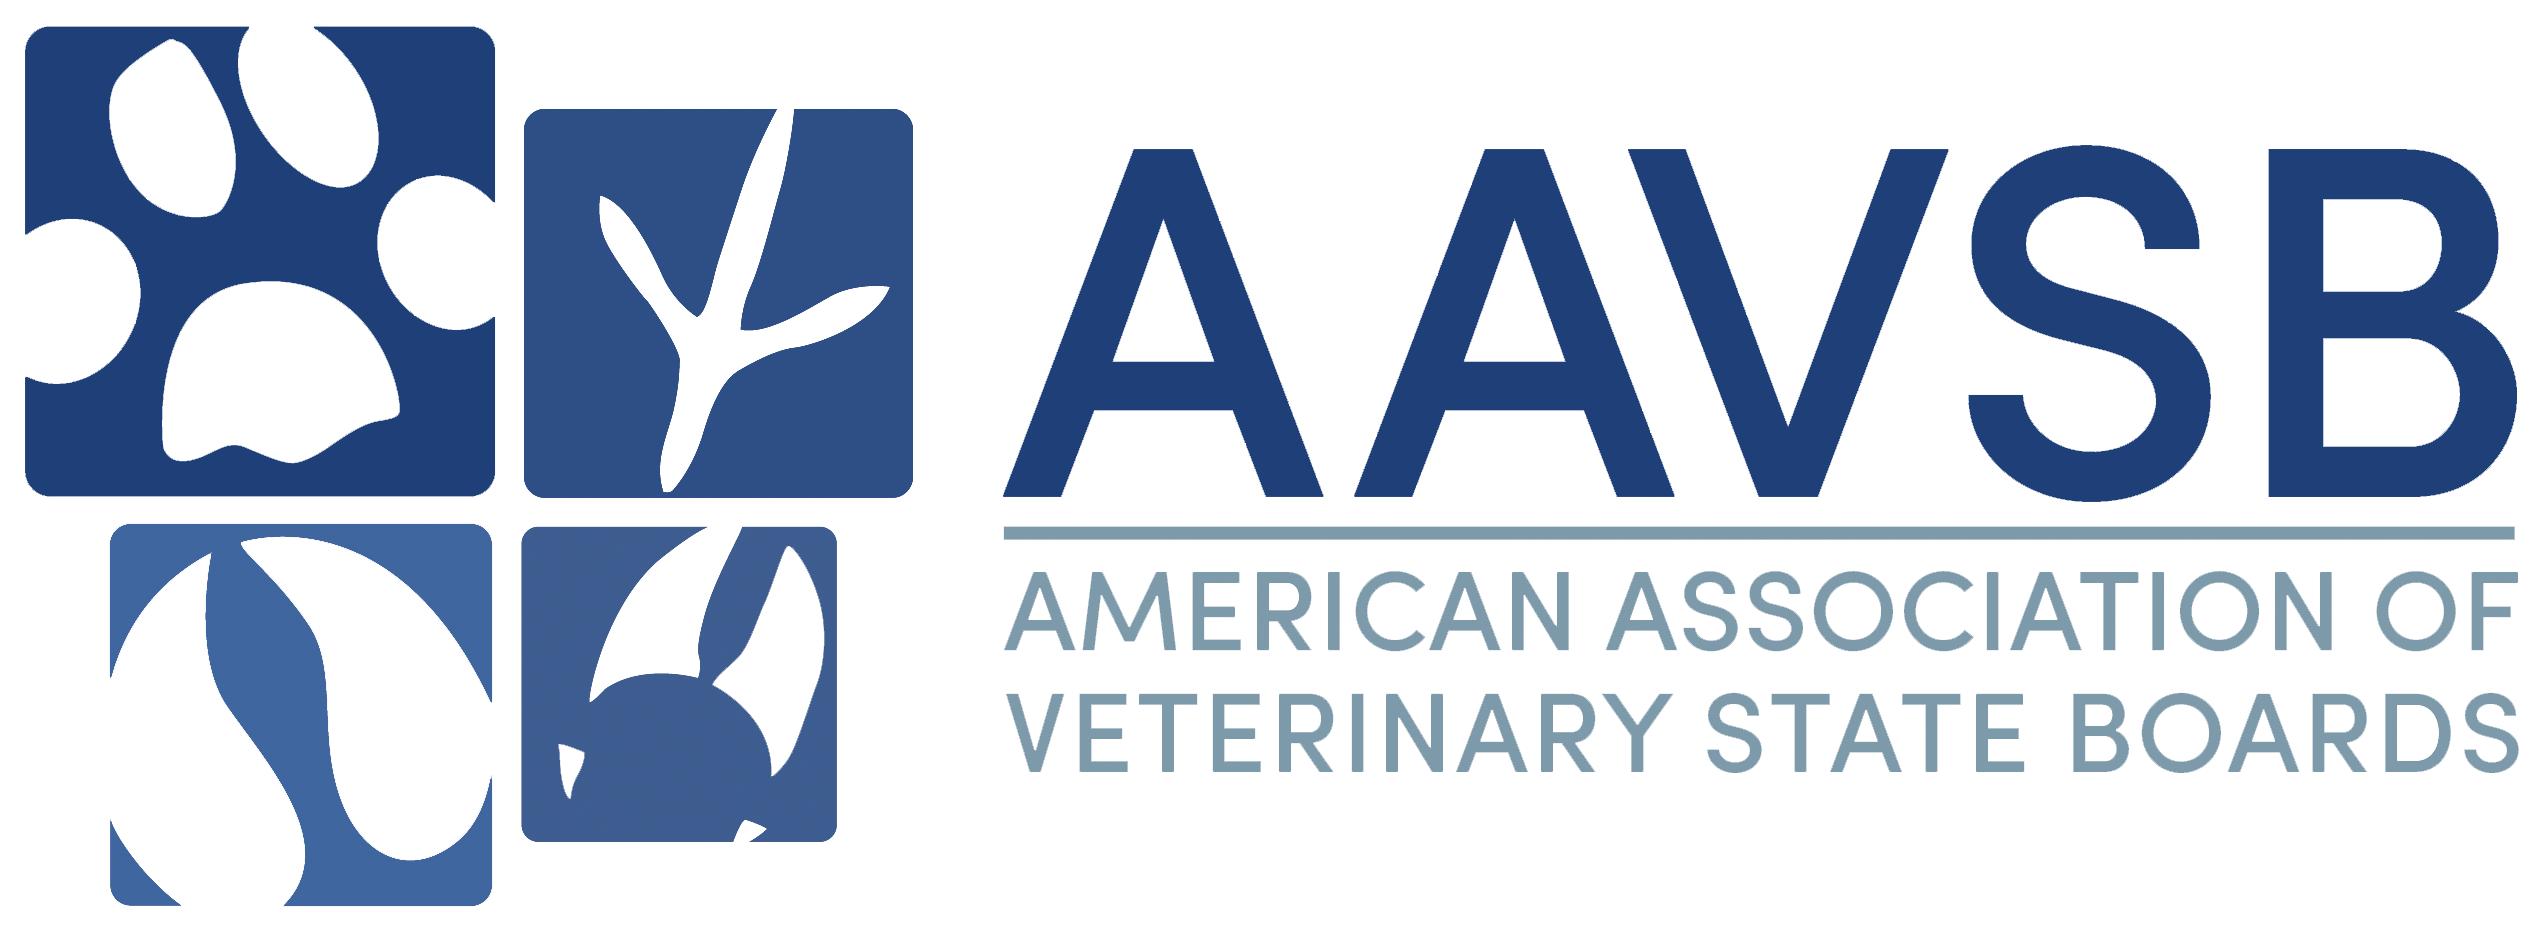 American Association of Veterinary State Boards Volunteers